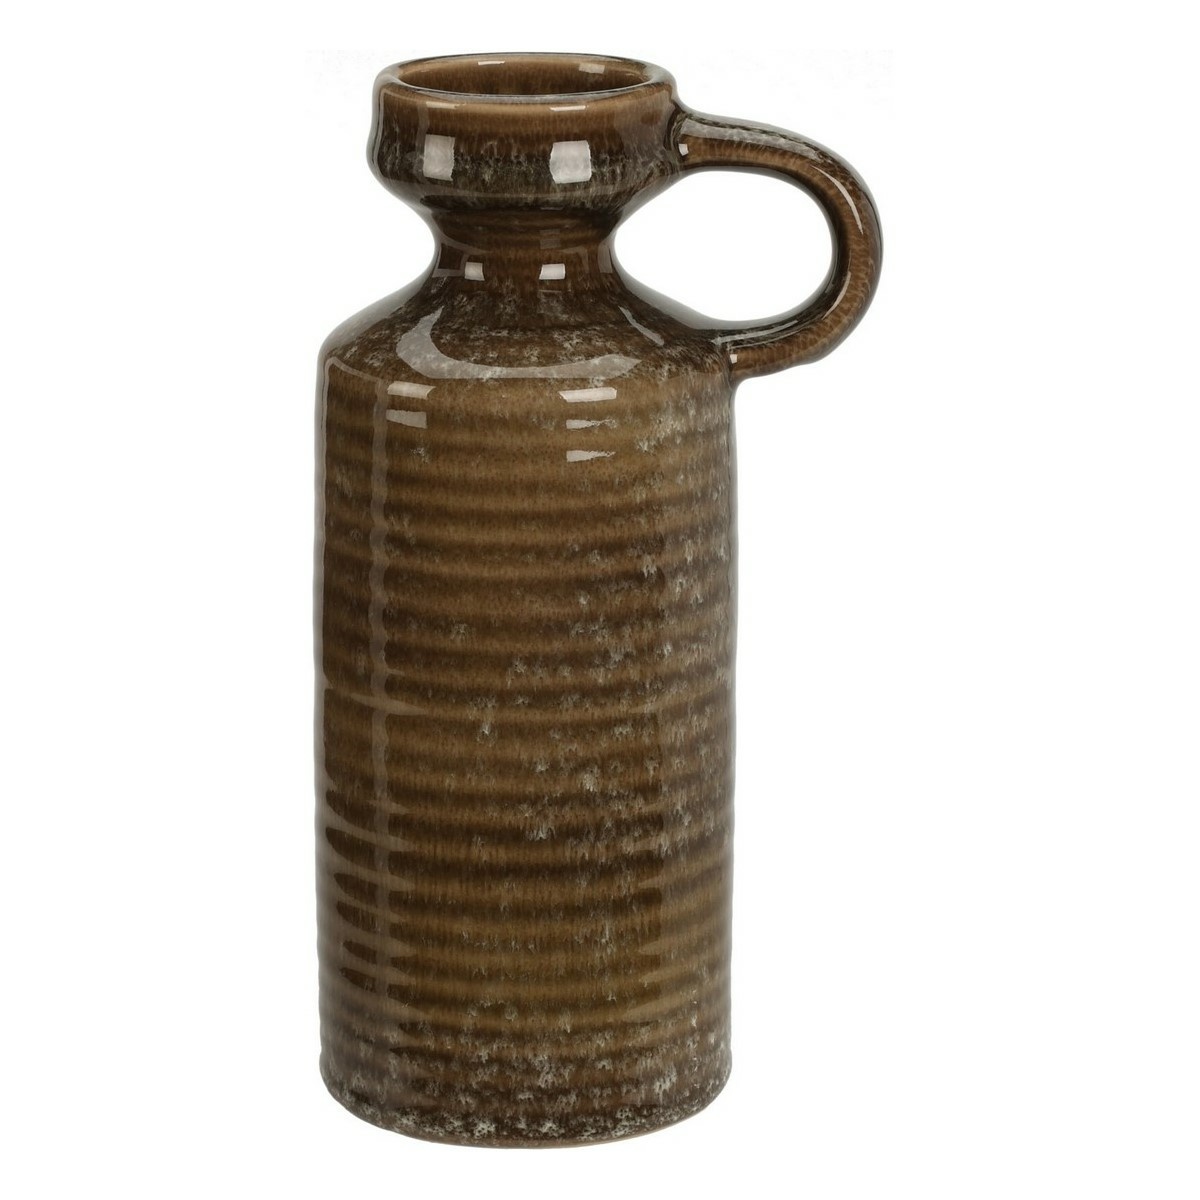 Busara kőagyag váza8,5 x 20 cm, barna